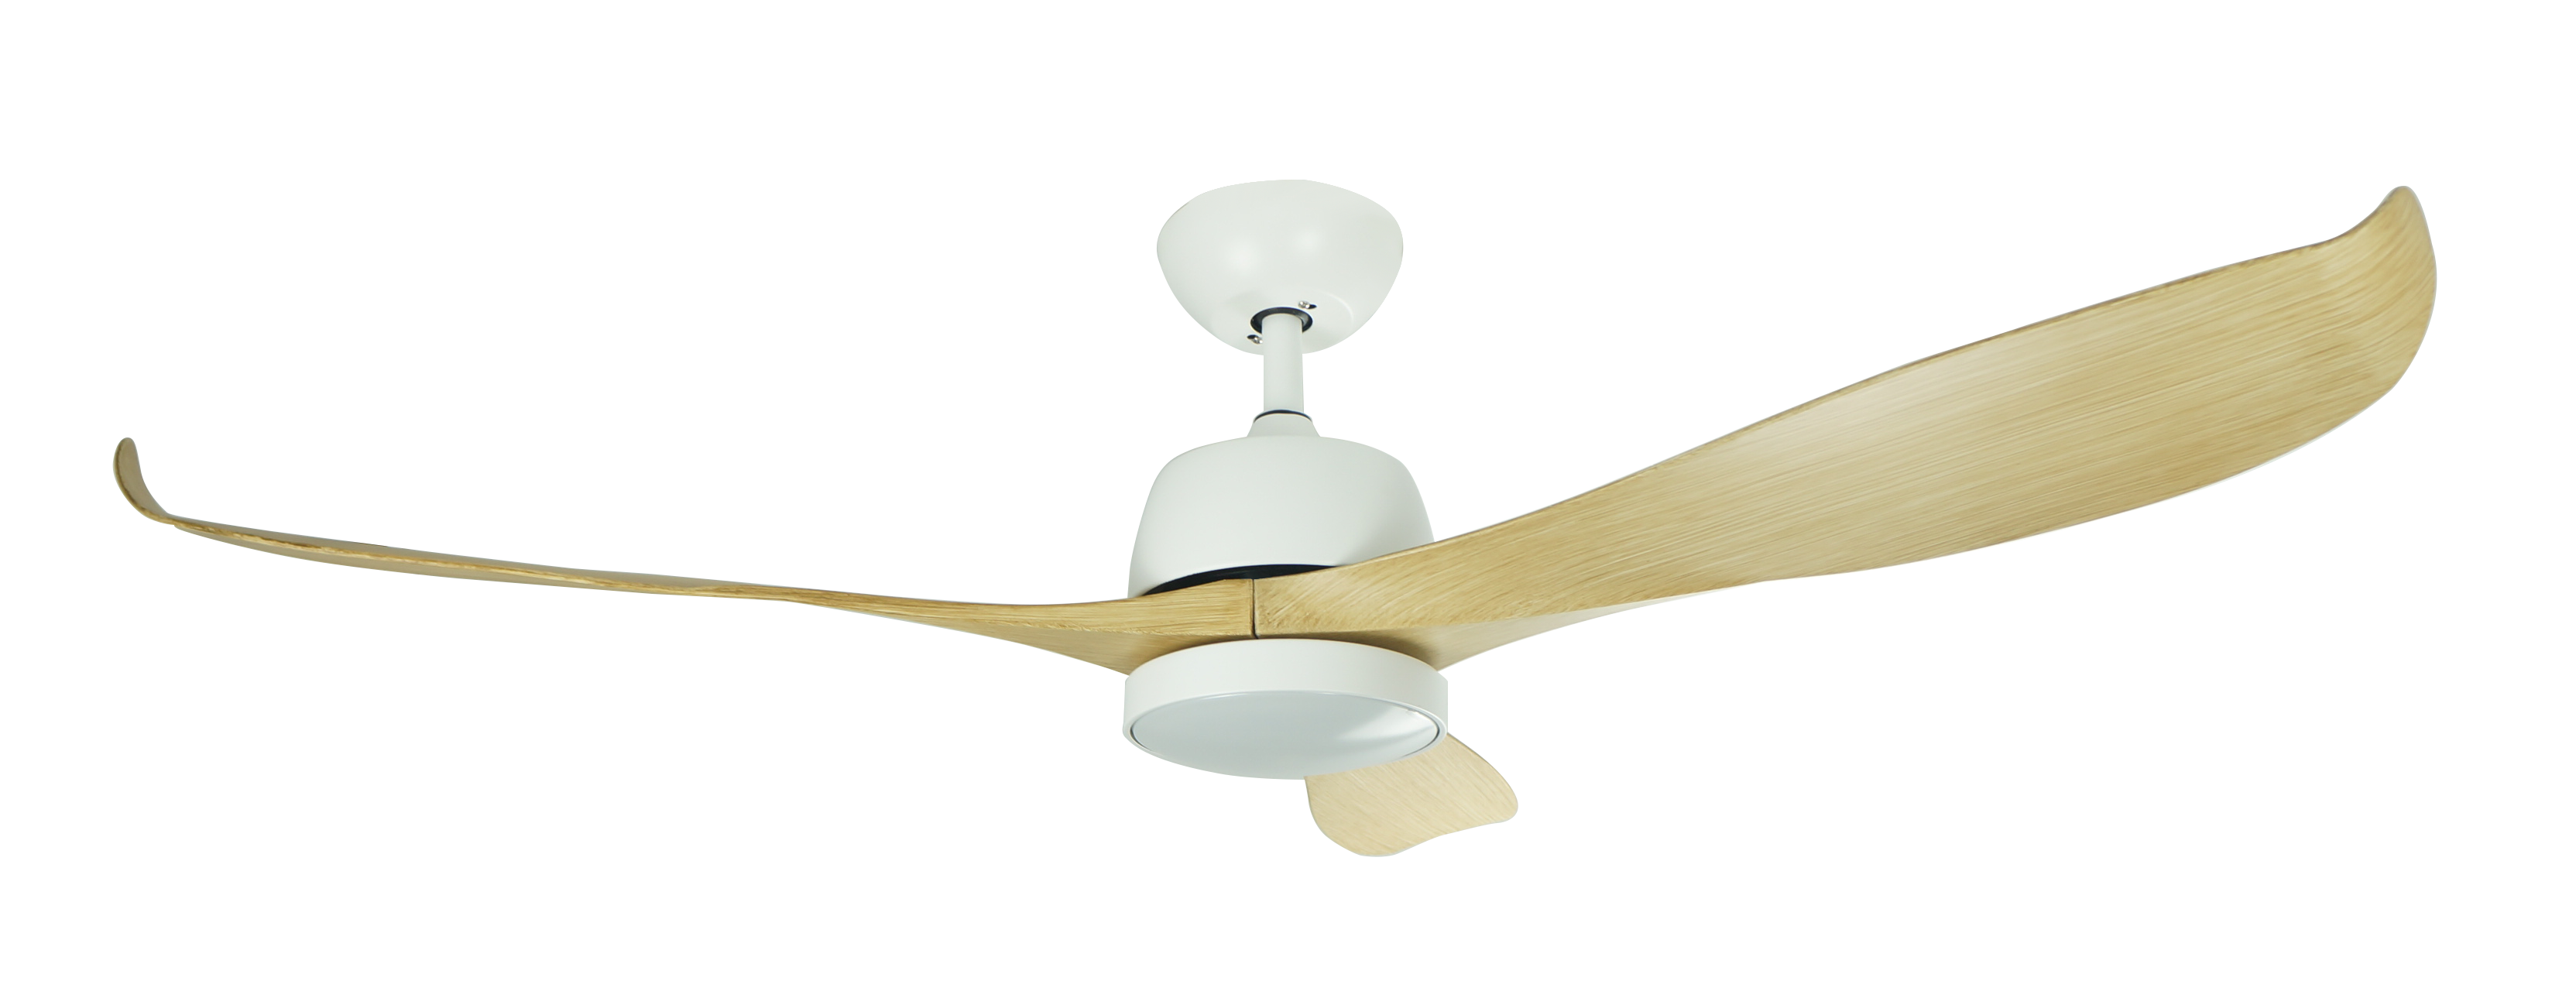 Control remoto del ventilador de techo de la sala de estar del hogar